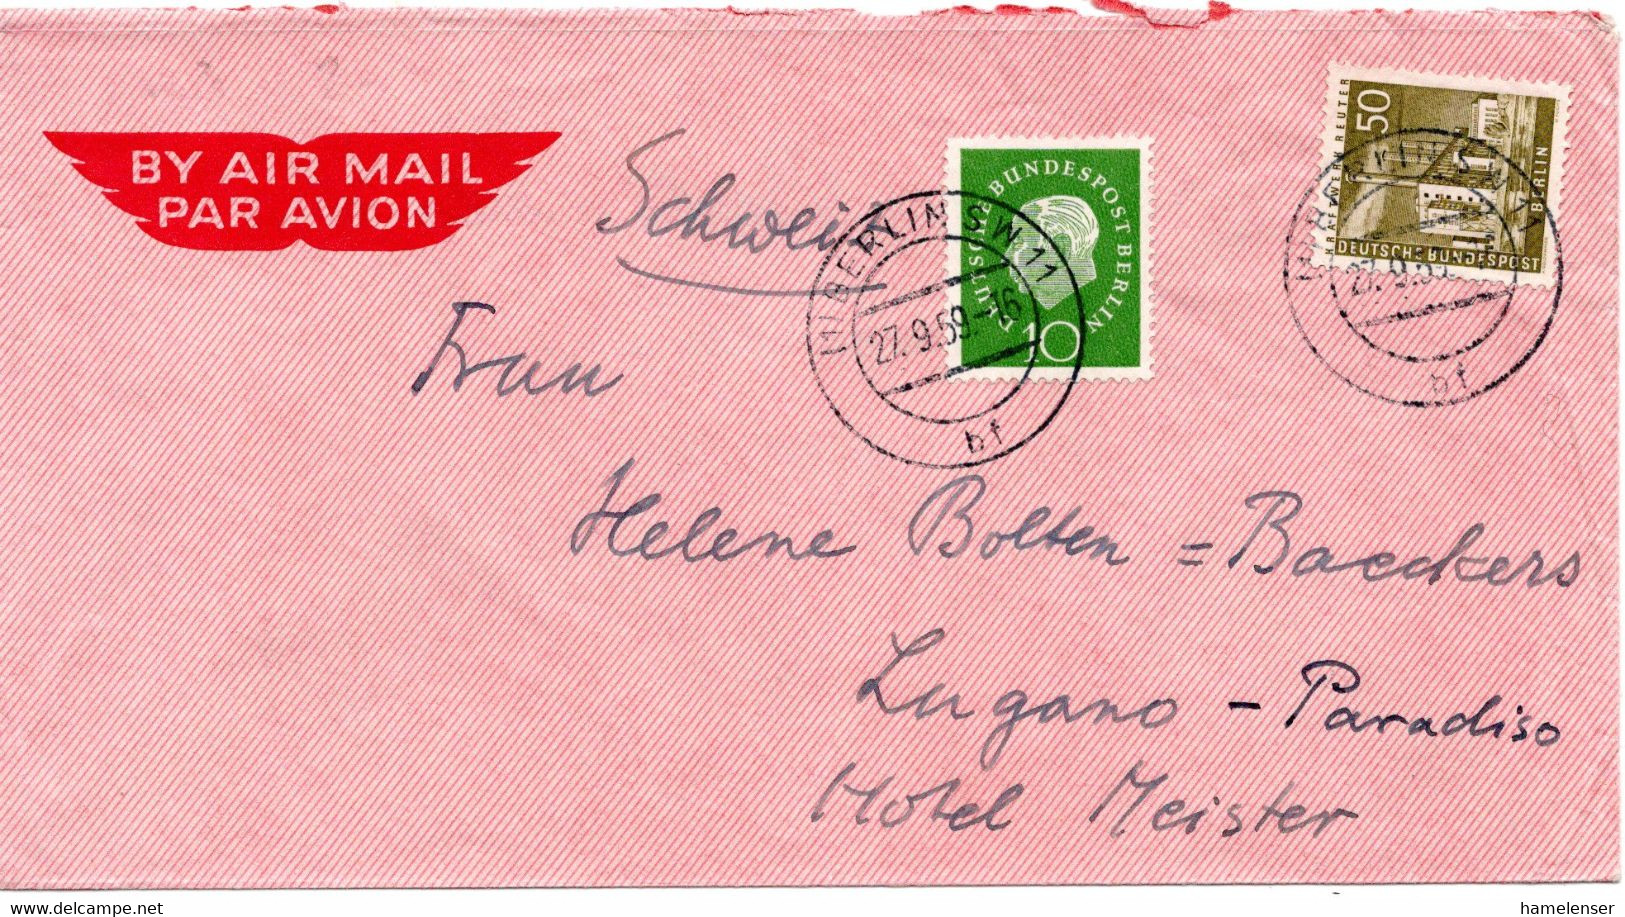 56811 - Berlin - 1959 - 50Pfg. Bauten MiF A LpBf BERLIN -> Schweiz - Brieven En Documenten